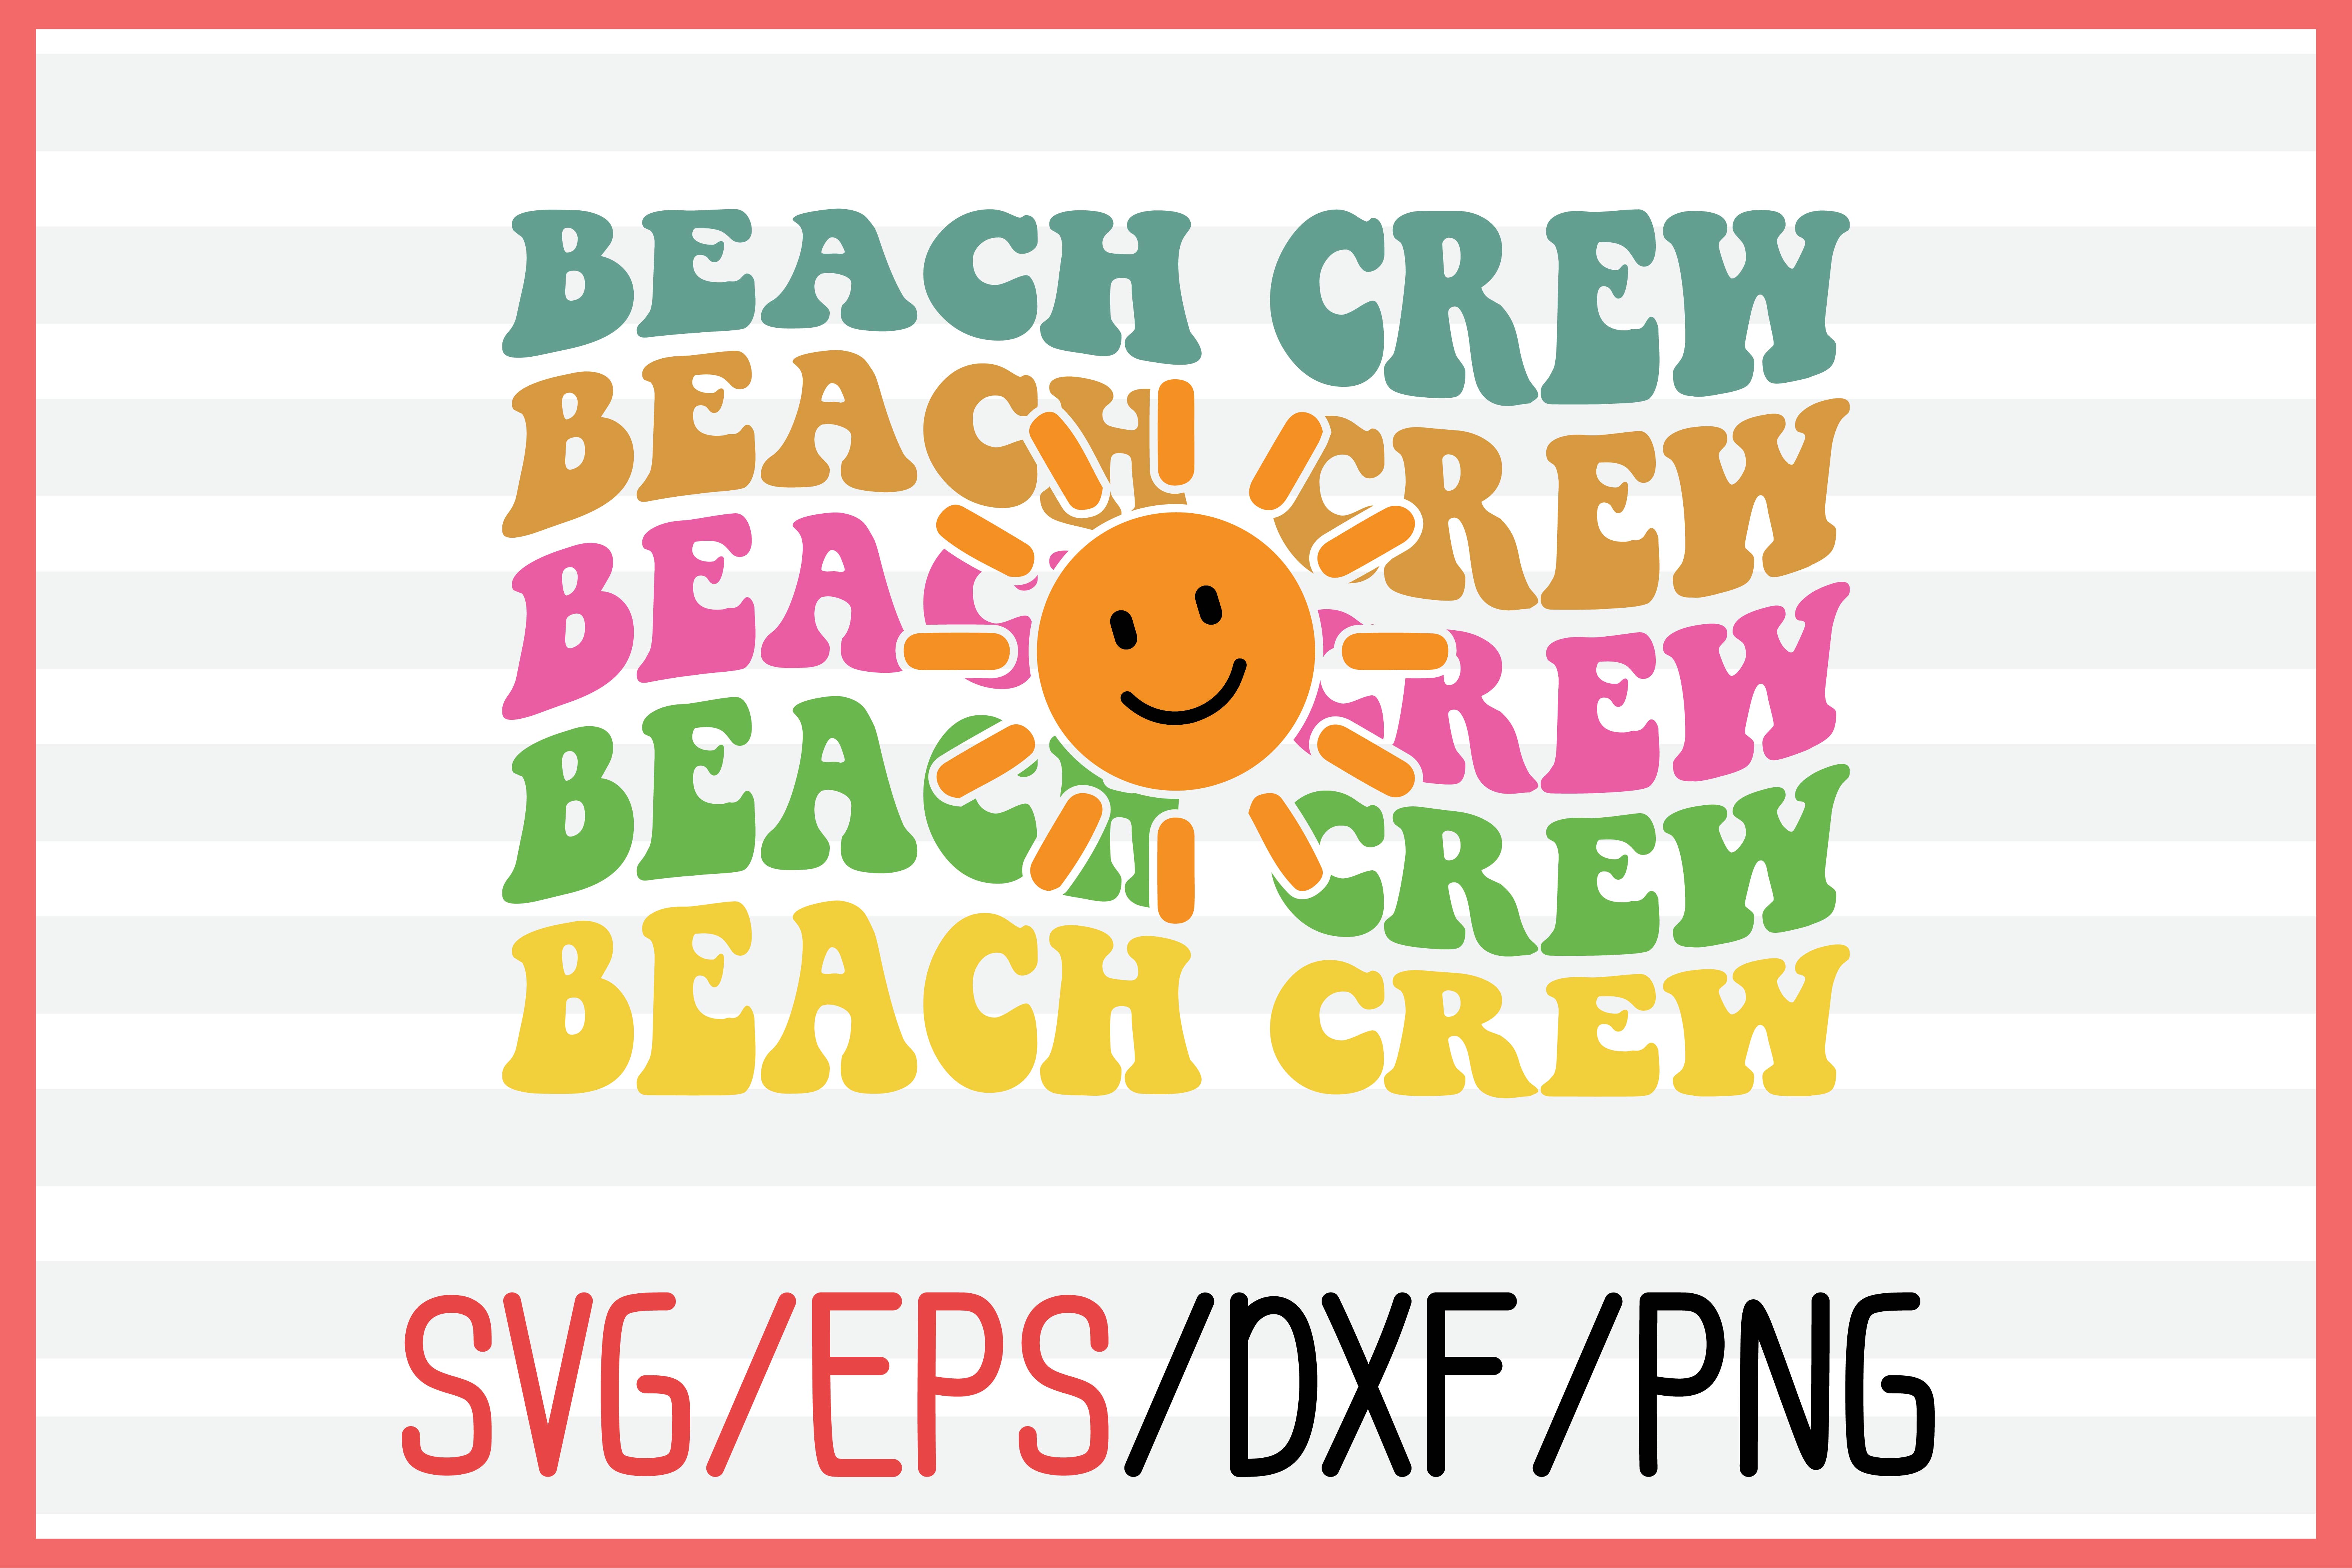 About Beach crew retro svg design pinterest preview image.